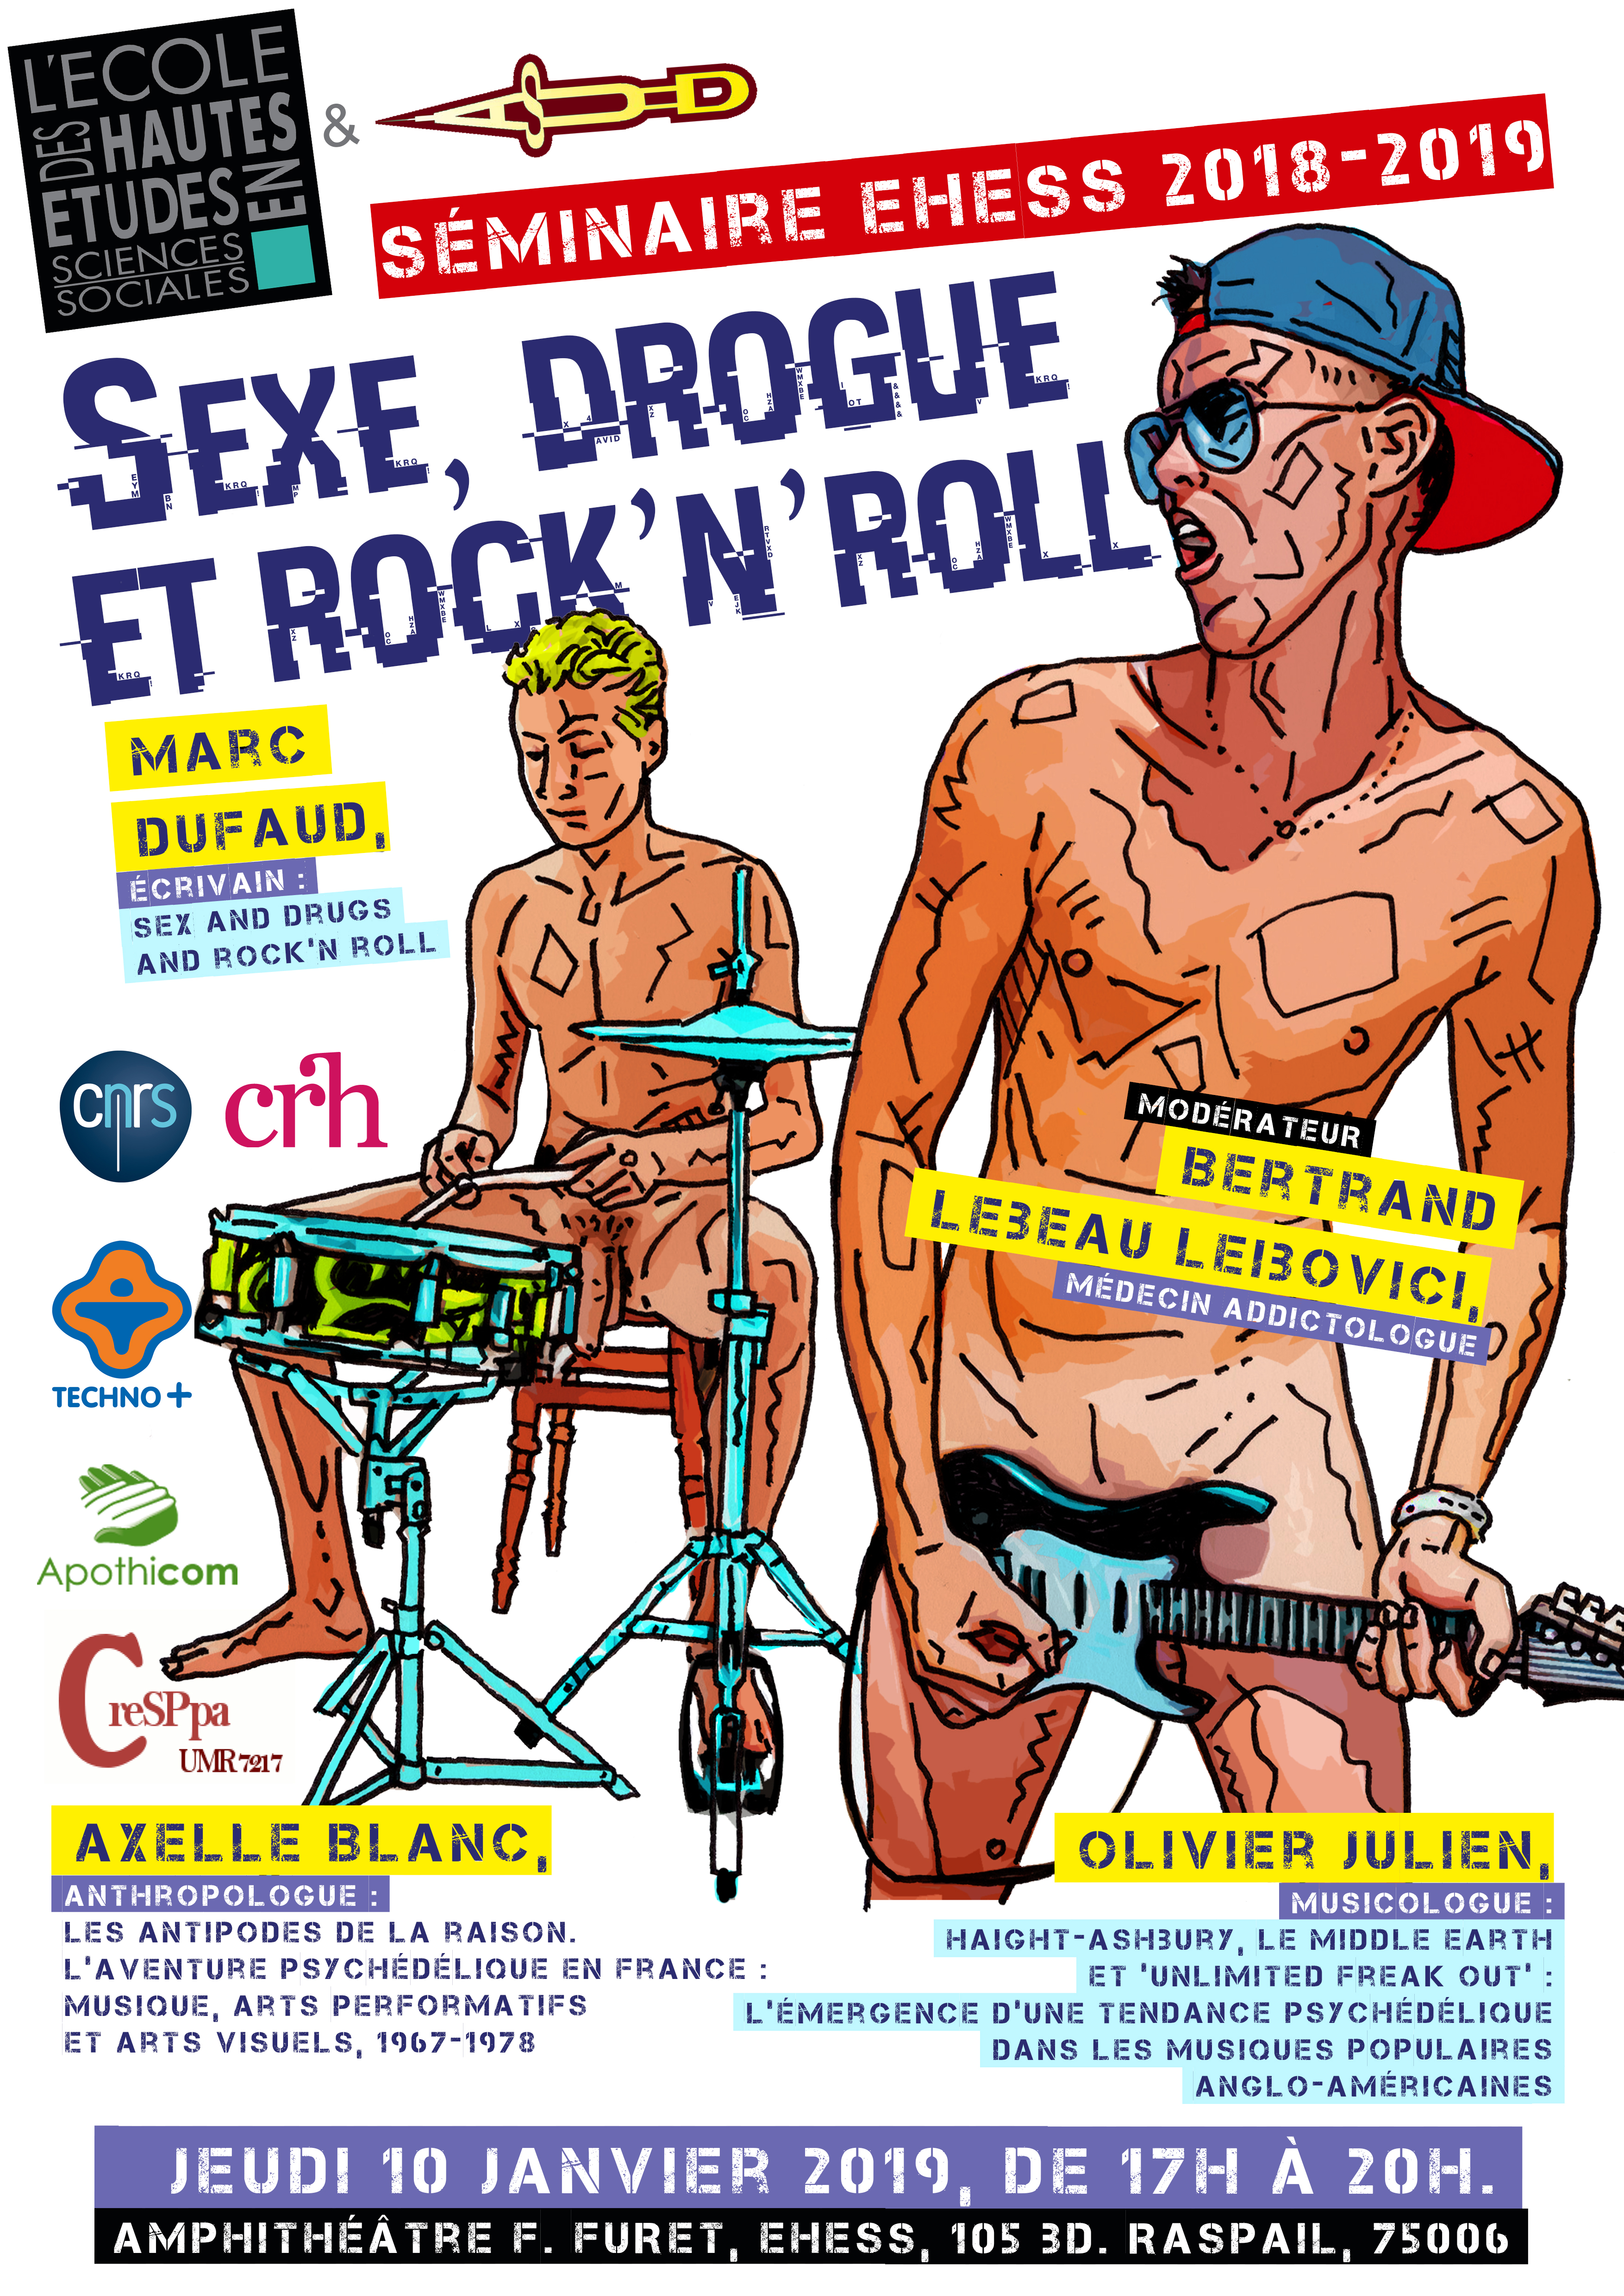 Sexe, drogues et rock'n roll